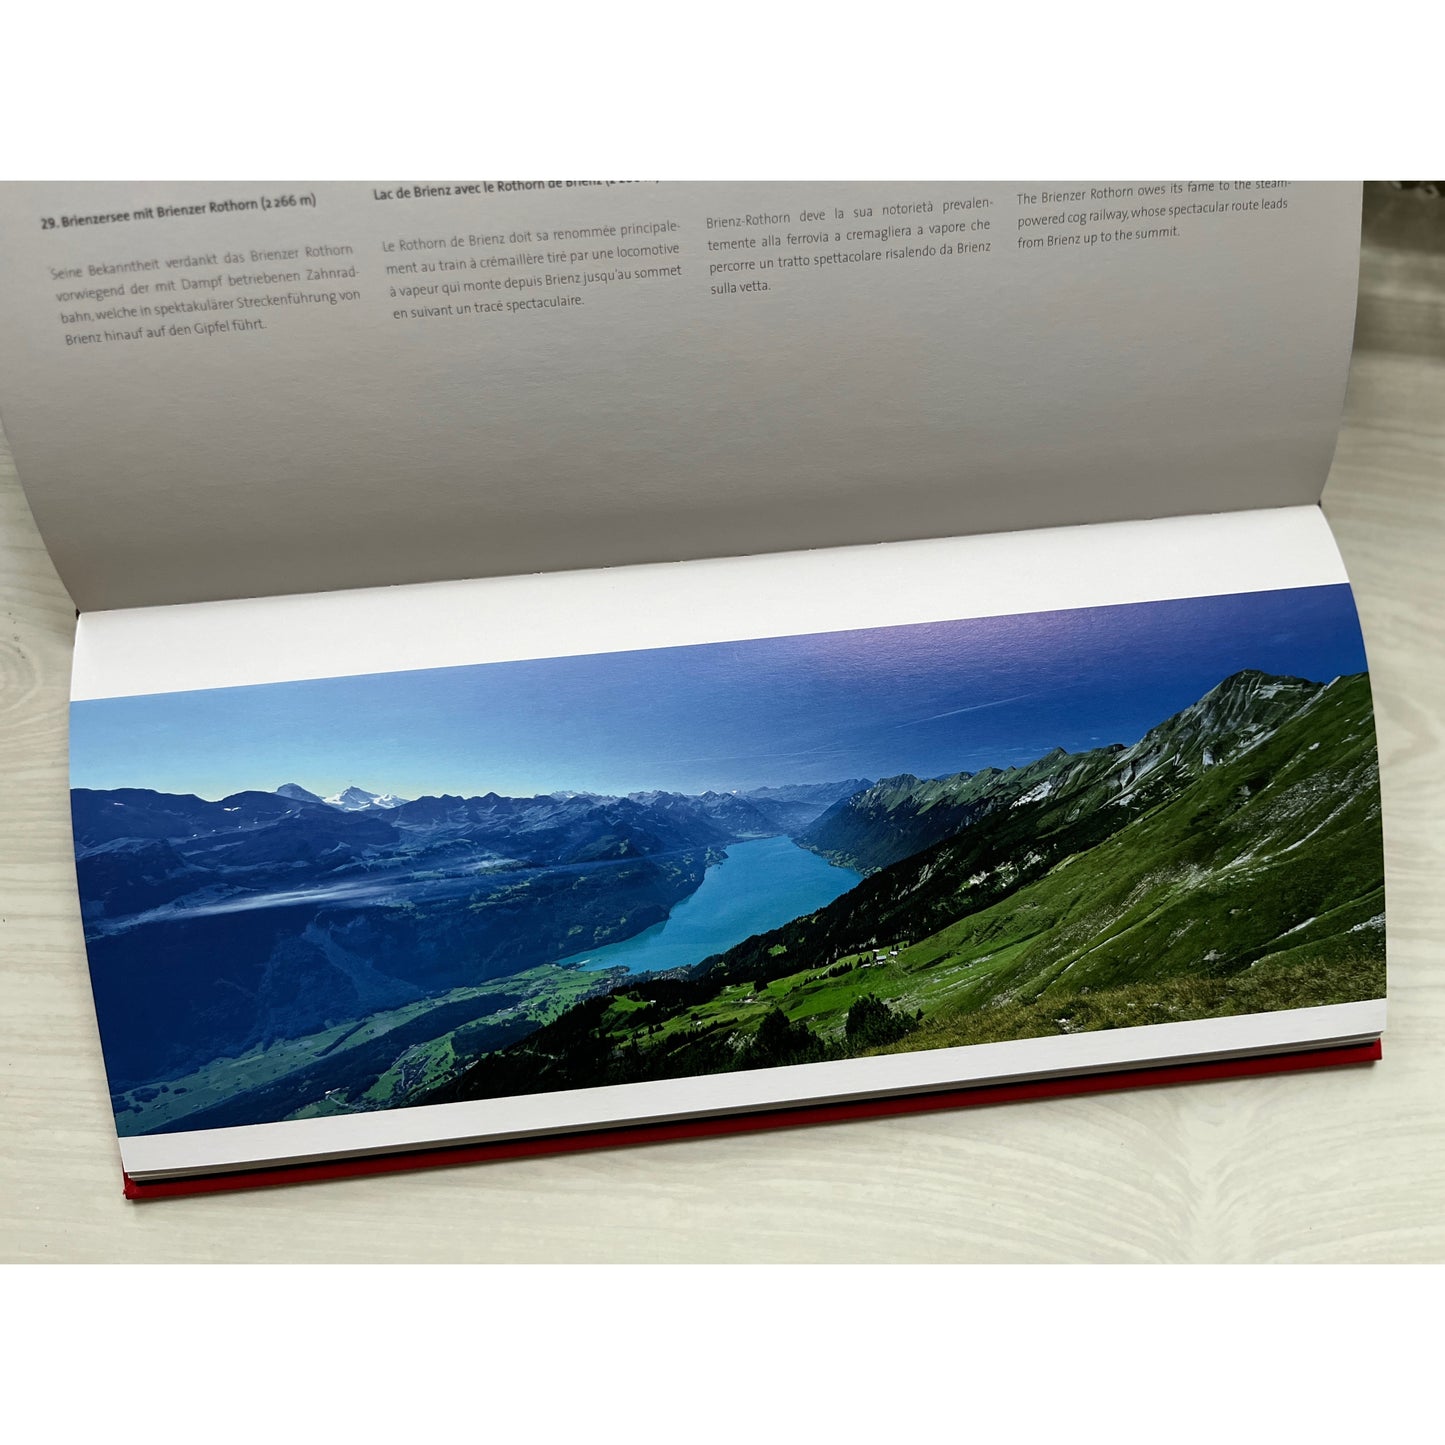 Schweiz (Swiss) Panorama Book